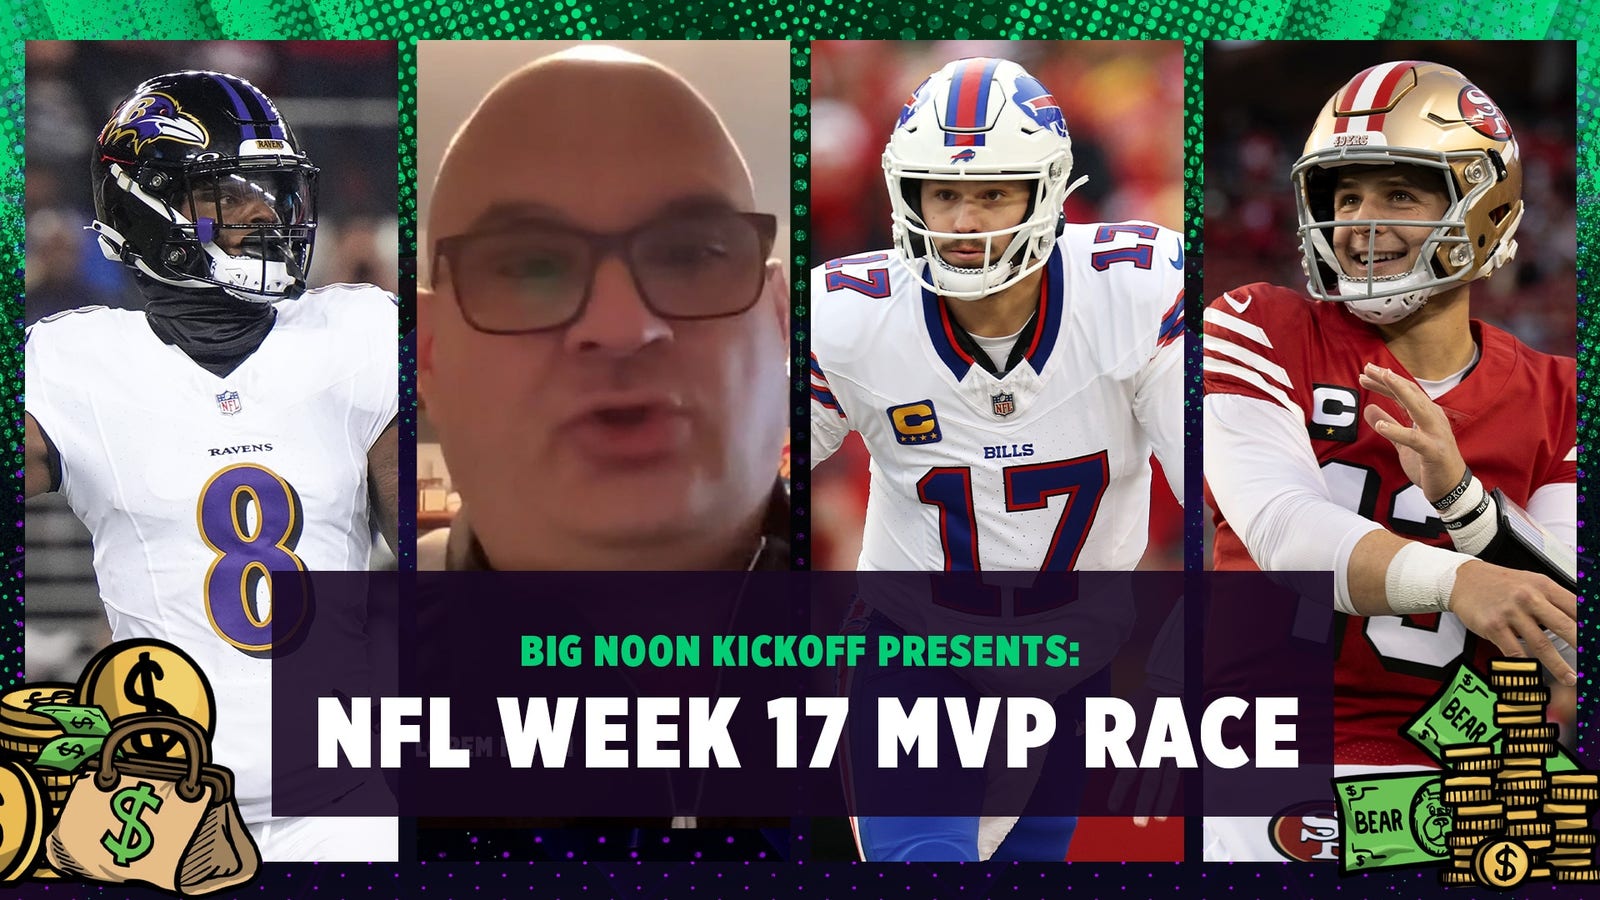 Ravens’ Lamar Jackson leads NFL MVP Race, Bills’ Josh Allen Rises and 49ers’ Brock Purdy stumbles 